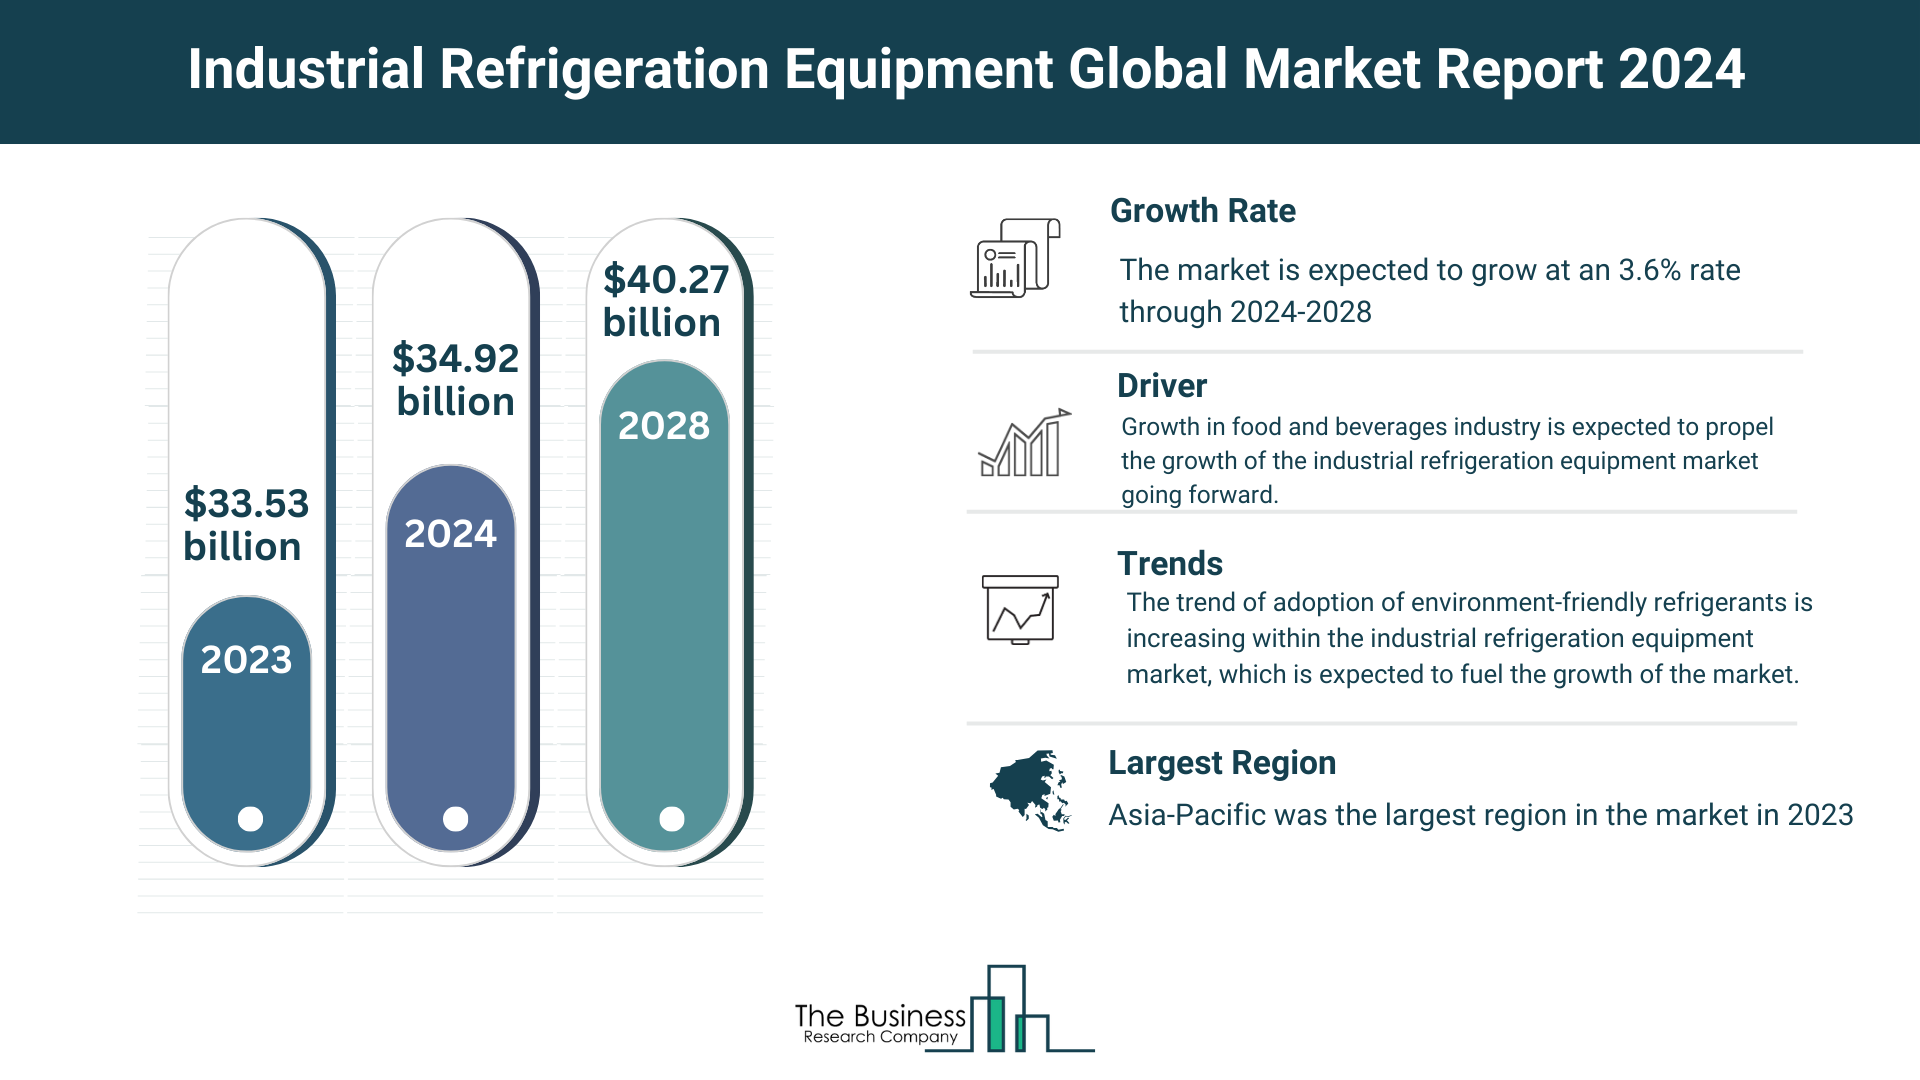 How Will Industrial Refrigeration Equipment Market Grow Through 2024-2033?